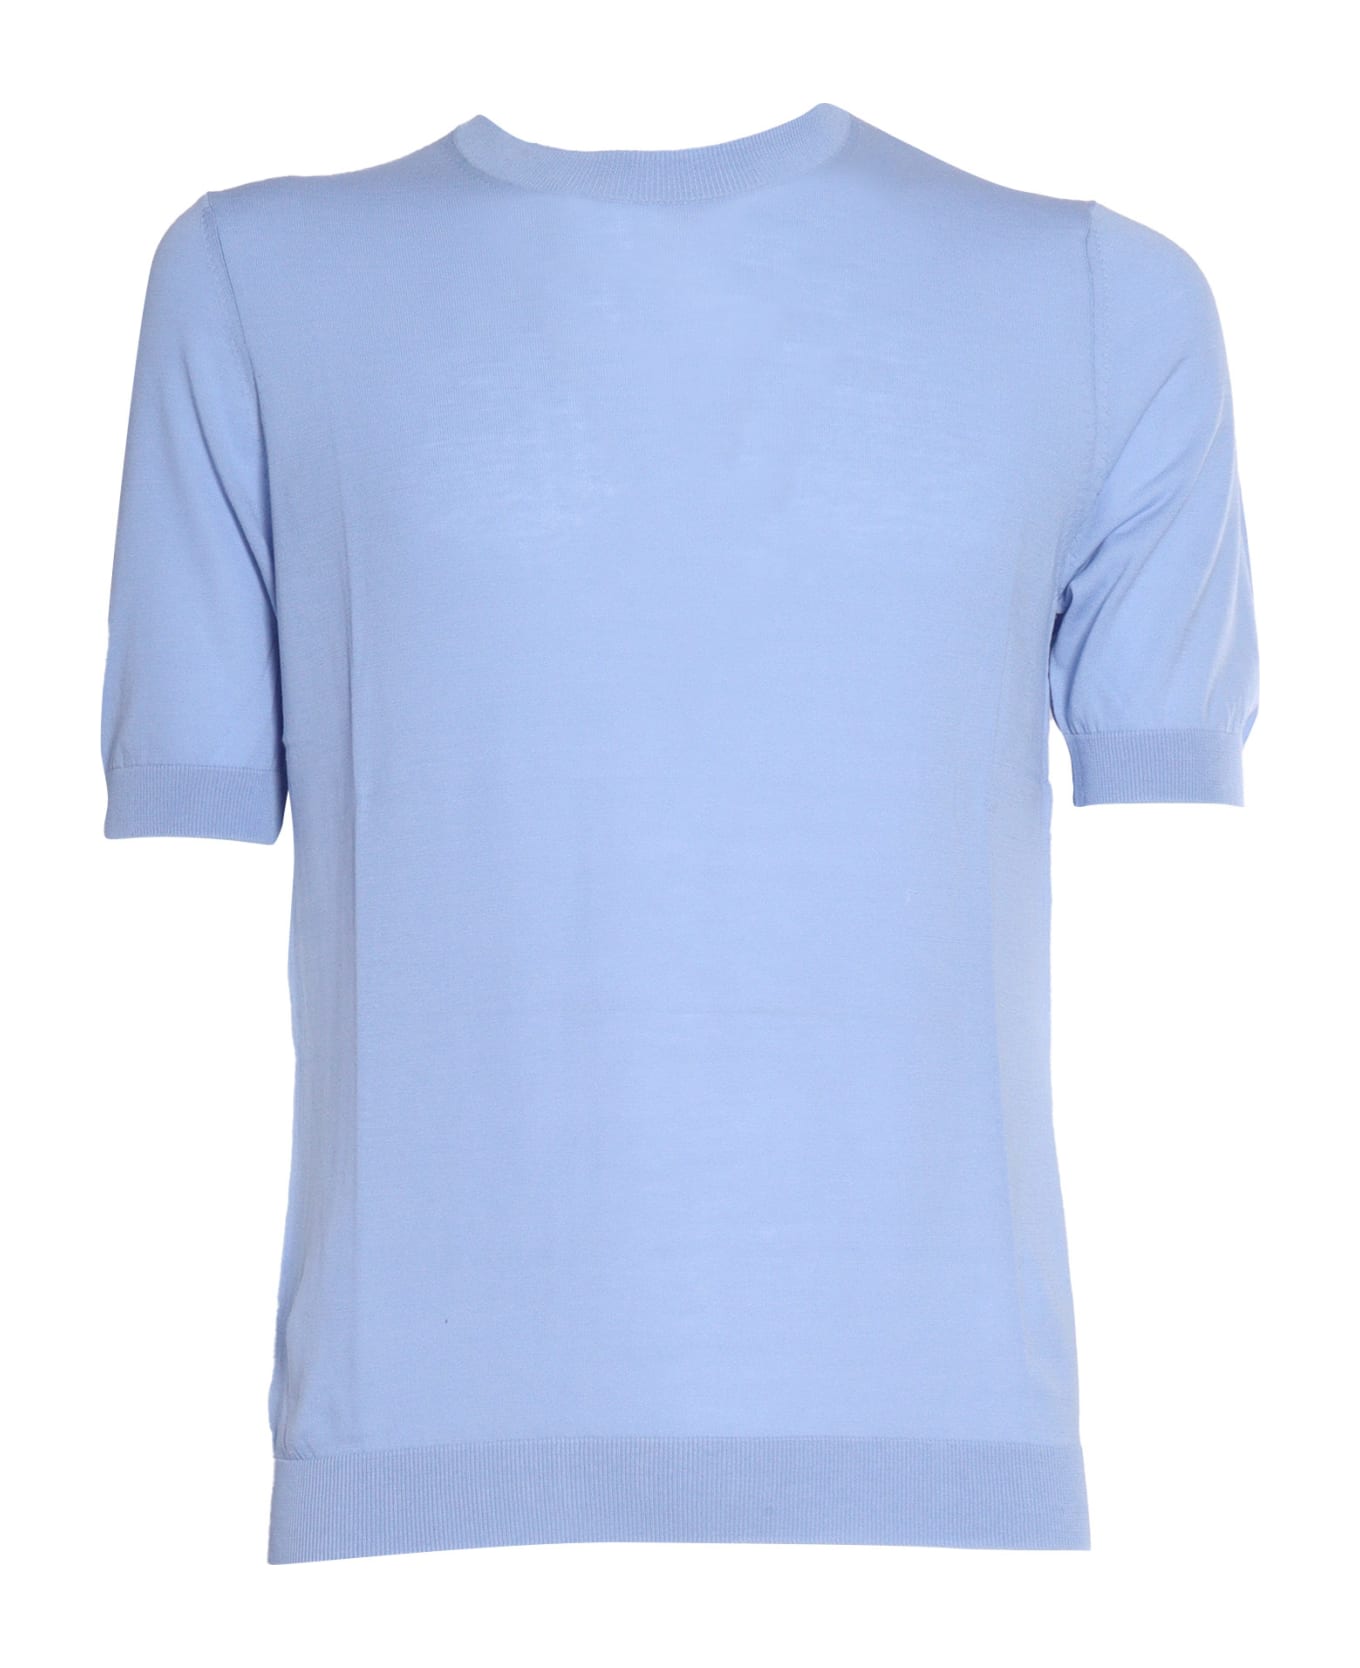 Ballantyne Light Blue Short-sleeved Shirt - BLUE